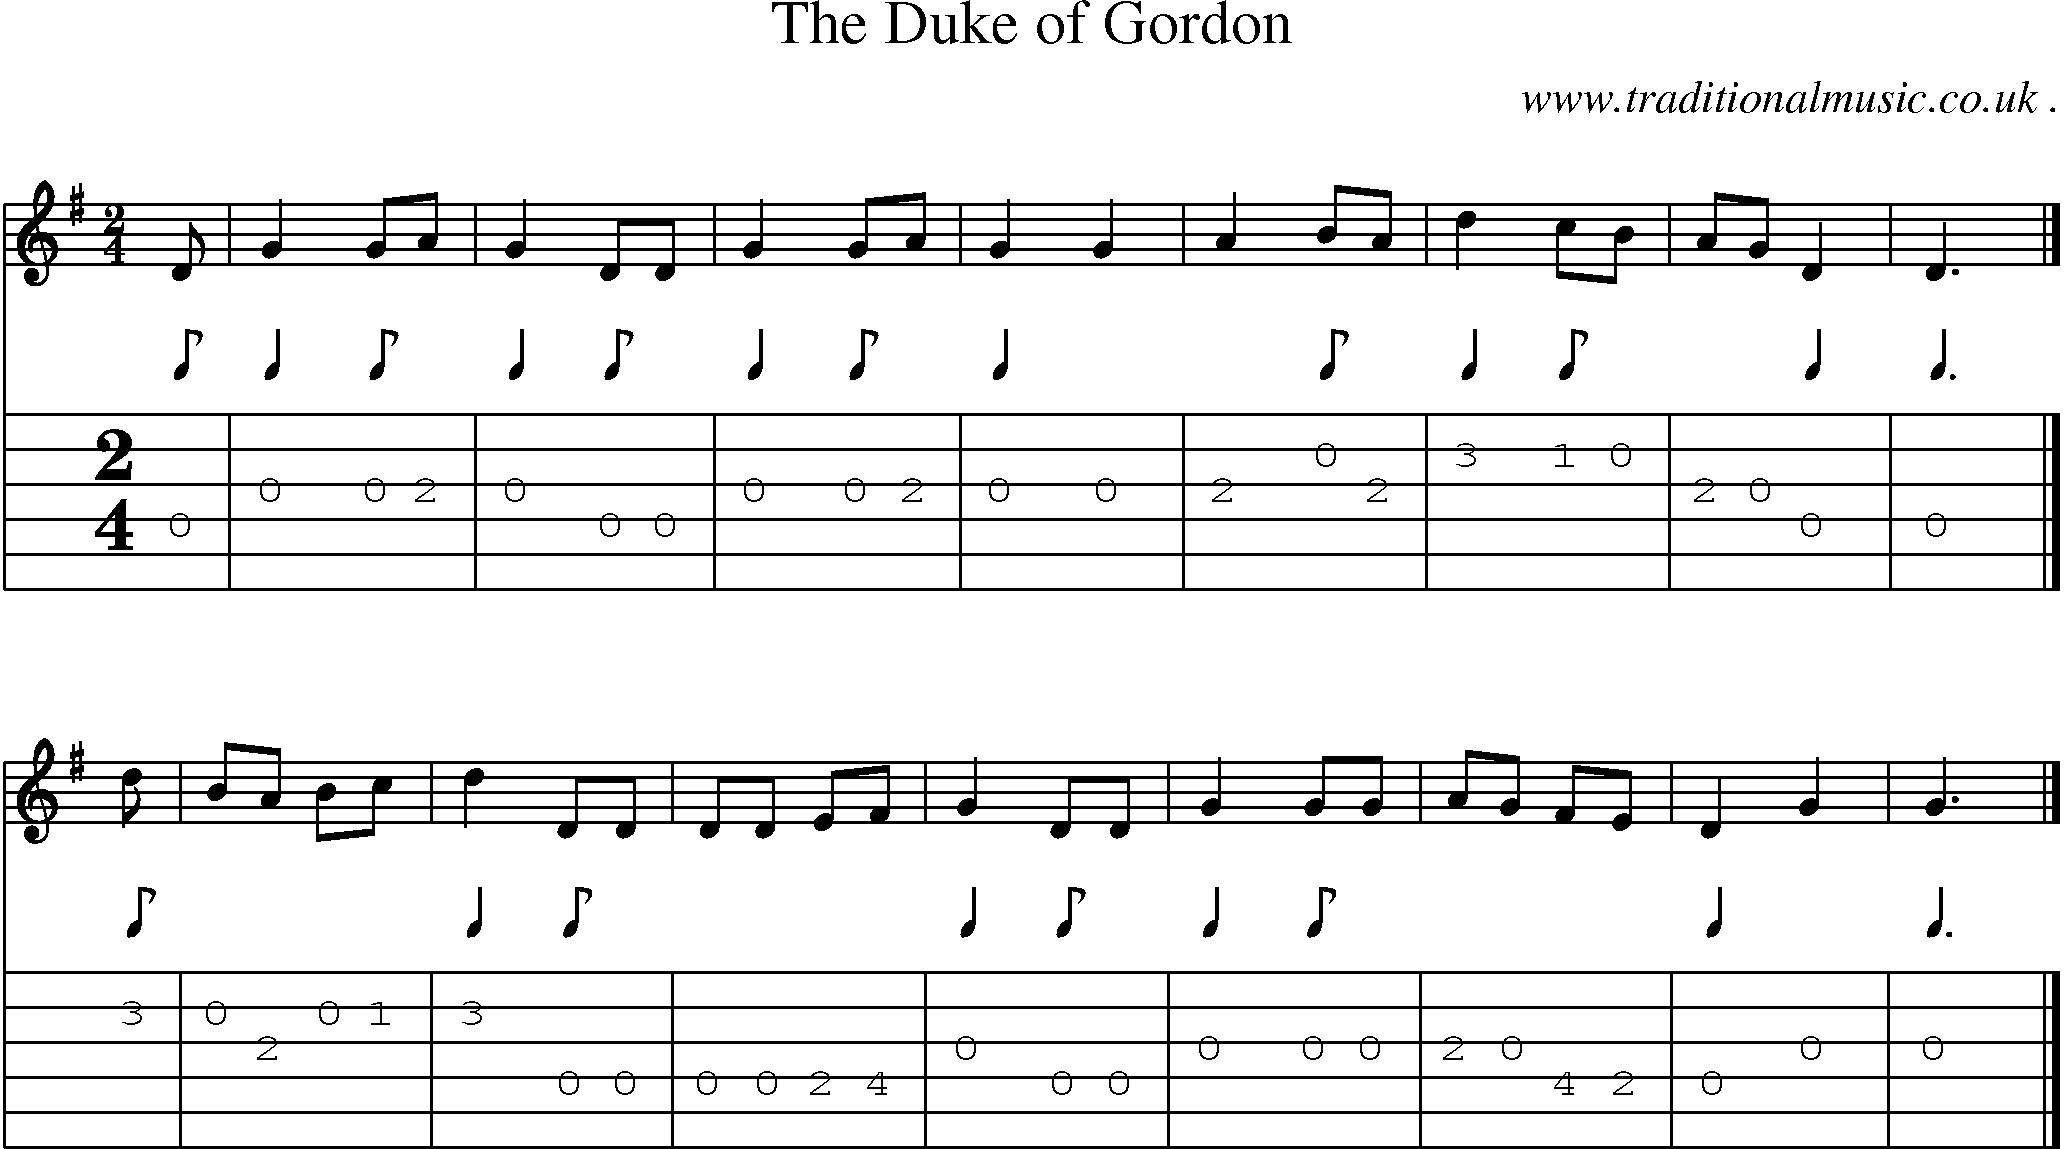 Sheet-music  score, Chords and Guitar Tabs for The Duke Of Gordon